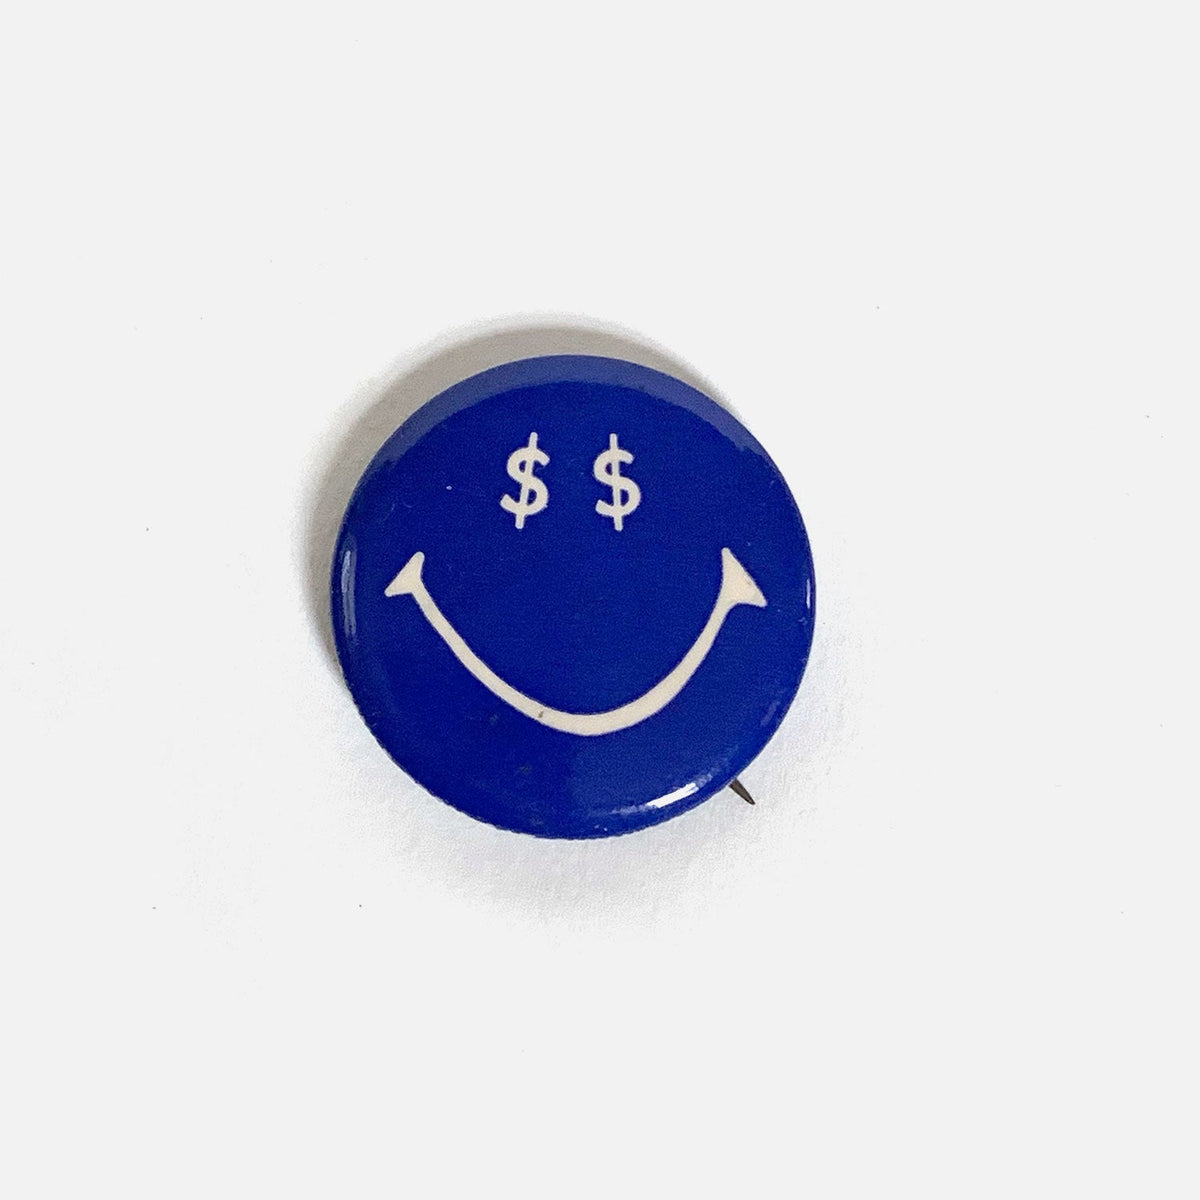 Vintage Blue $$ Smiley Face Pin Button